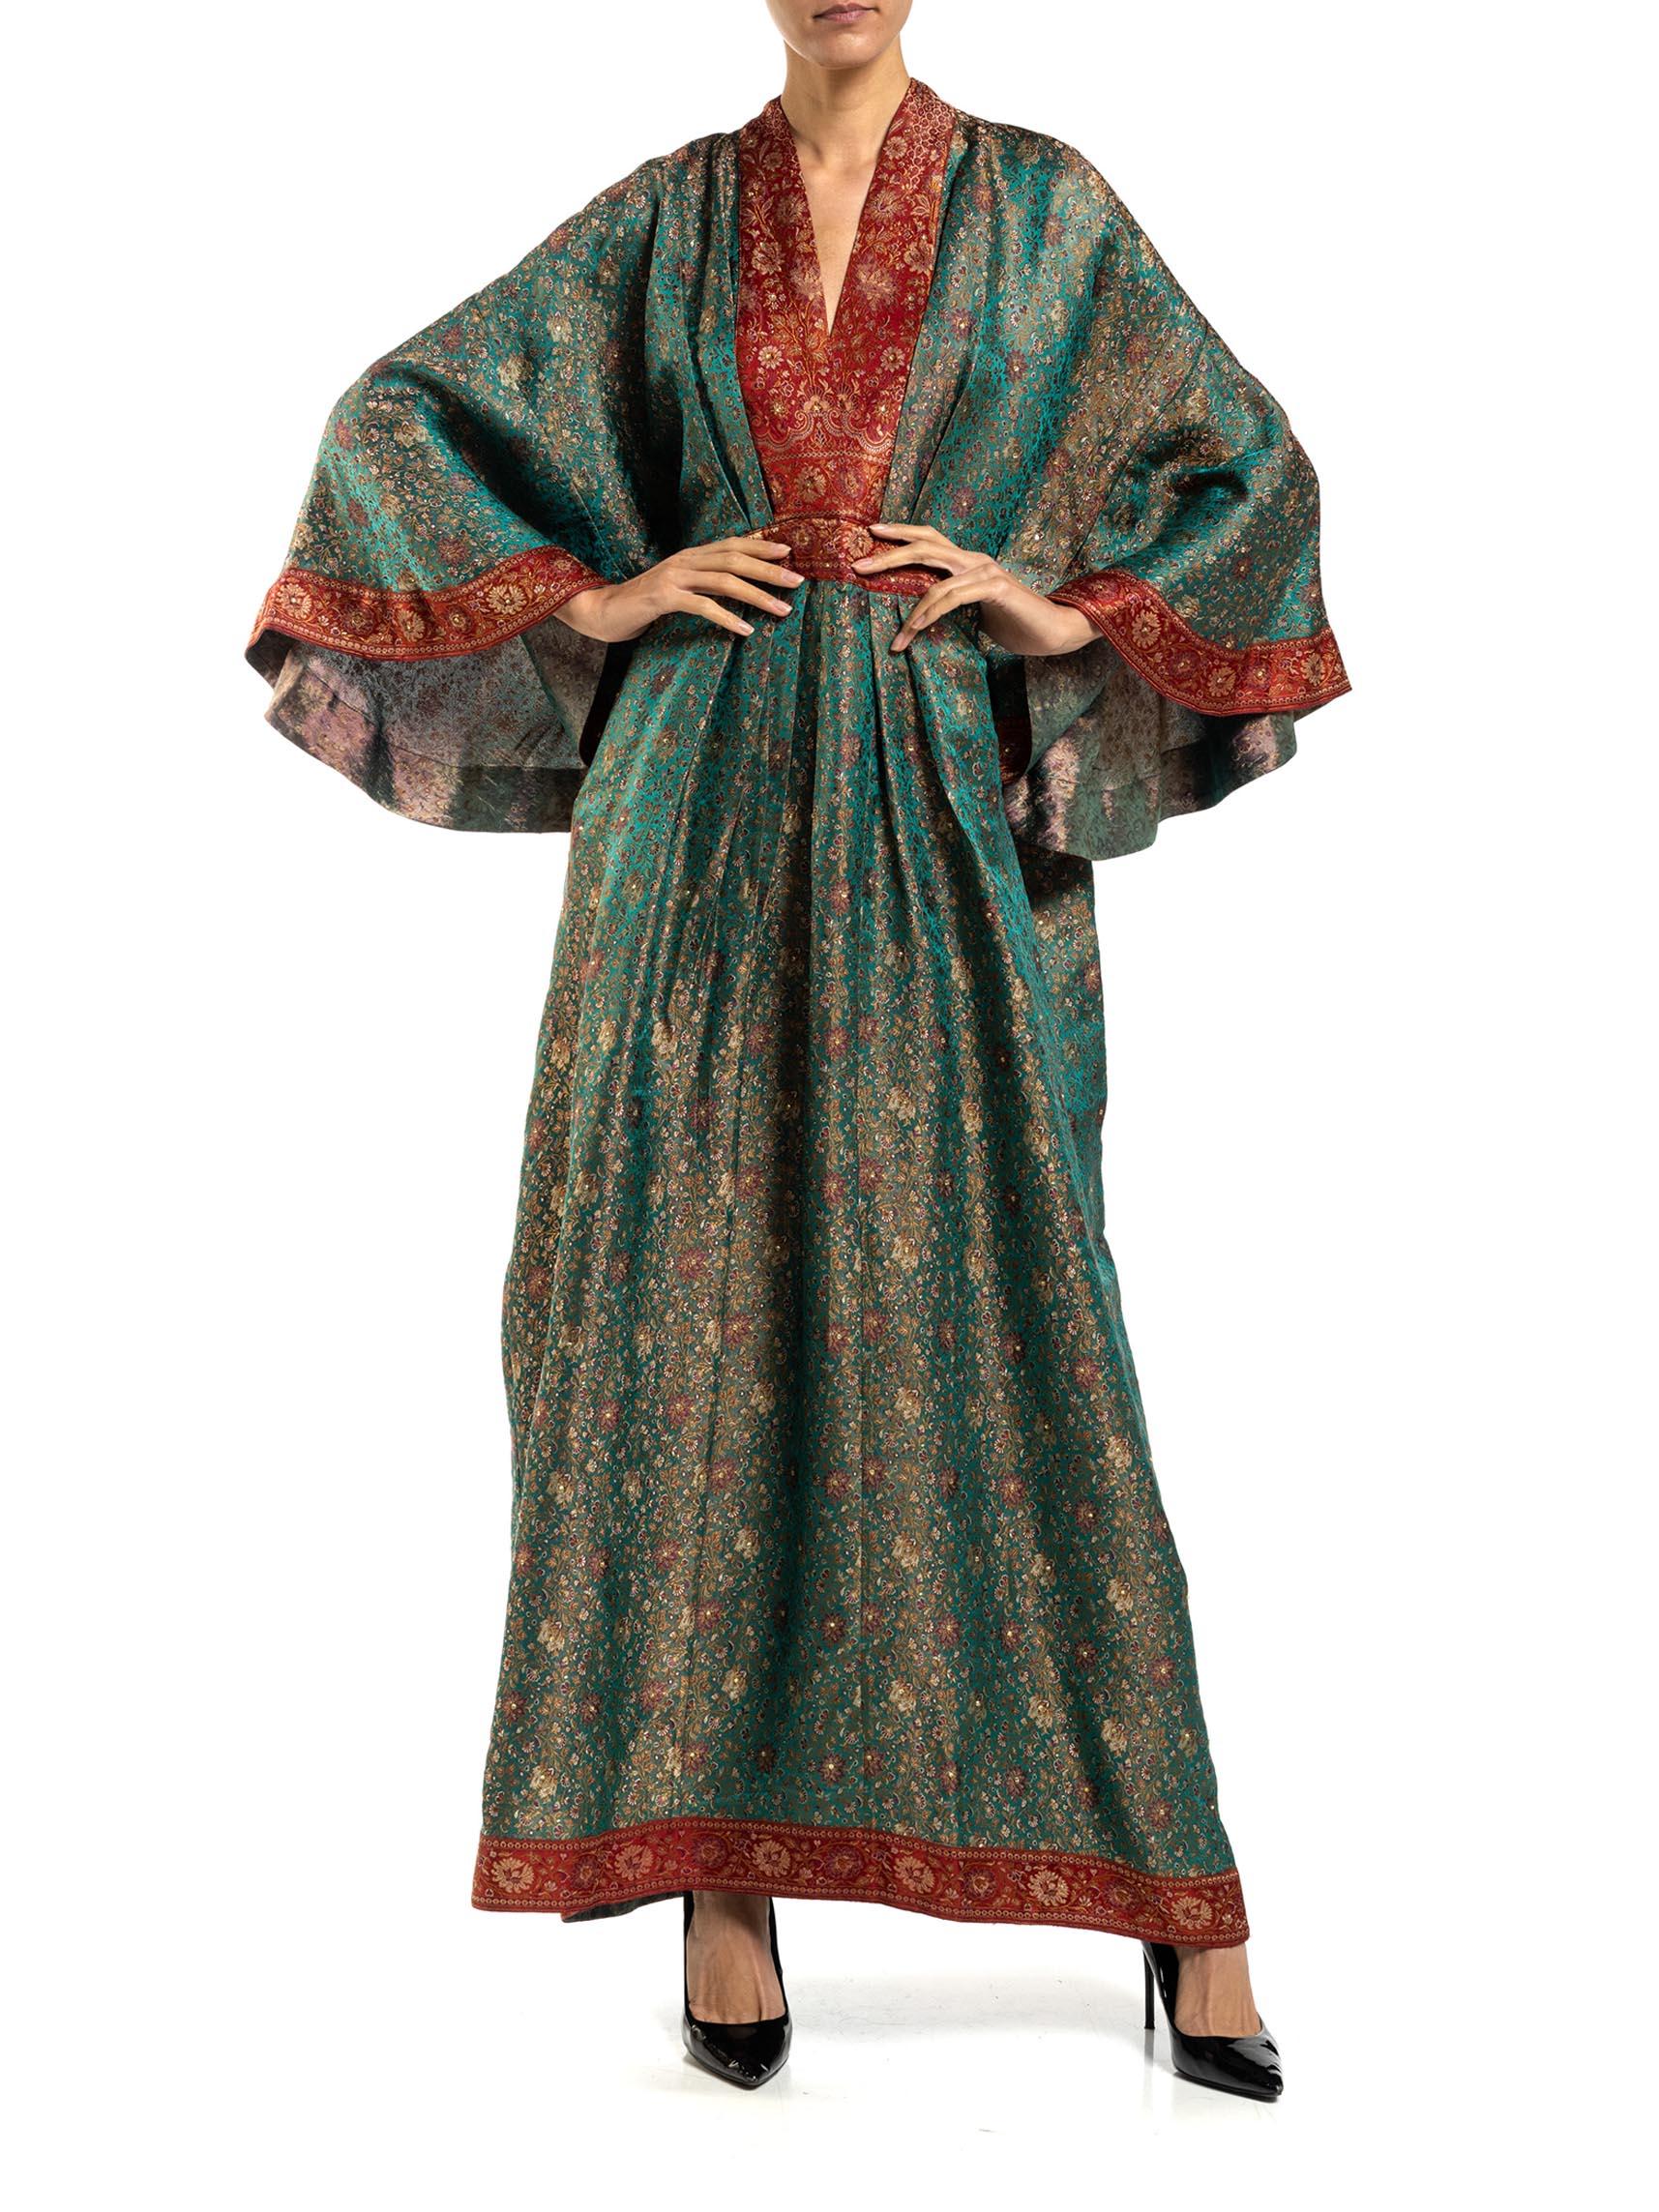 MORPHEW COLLECTION Teal & Burgundy Floral Silk Studded Kaftan Made From Vintage For Sale 5